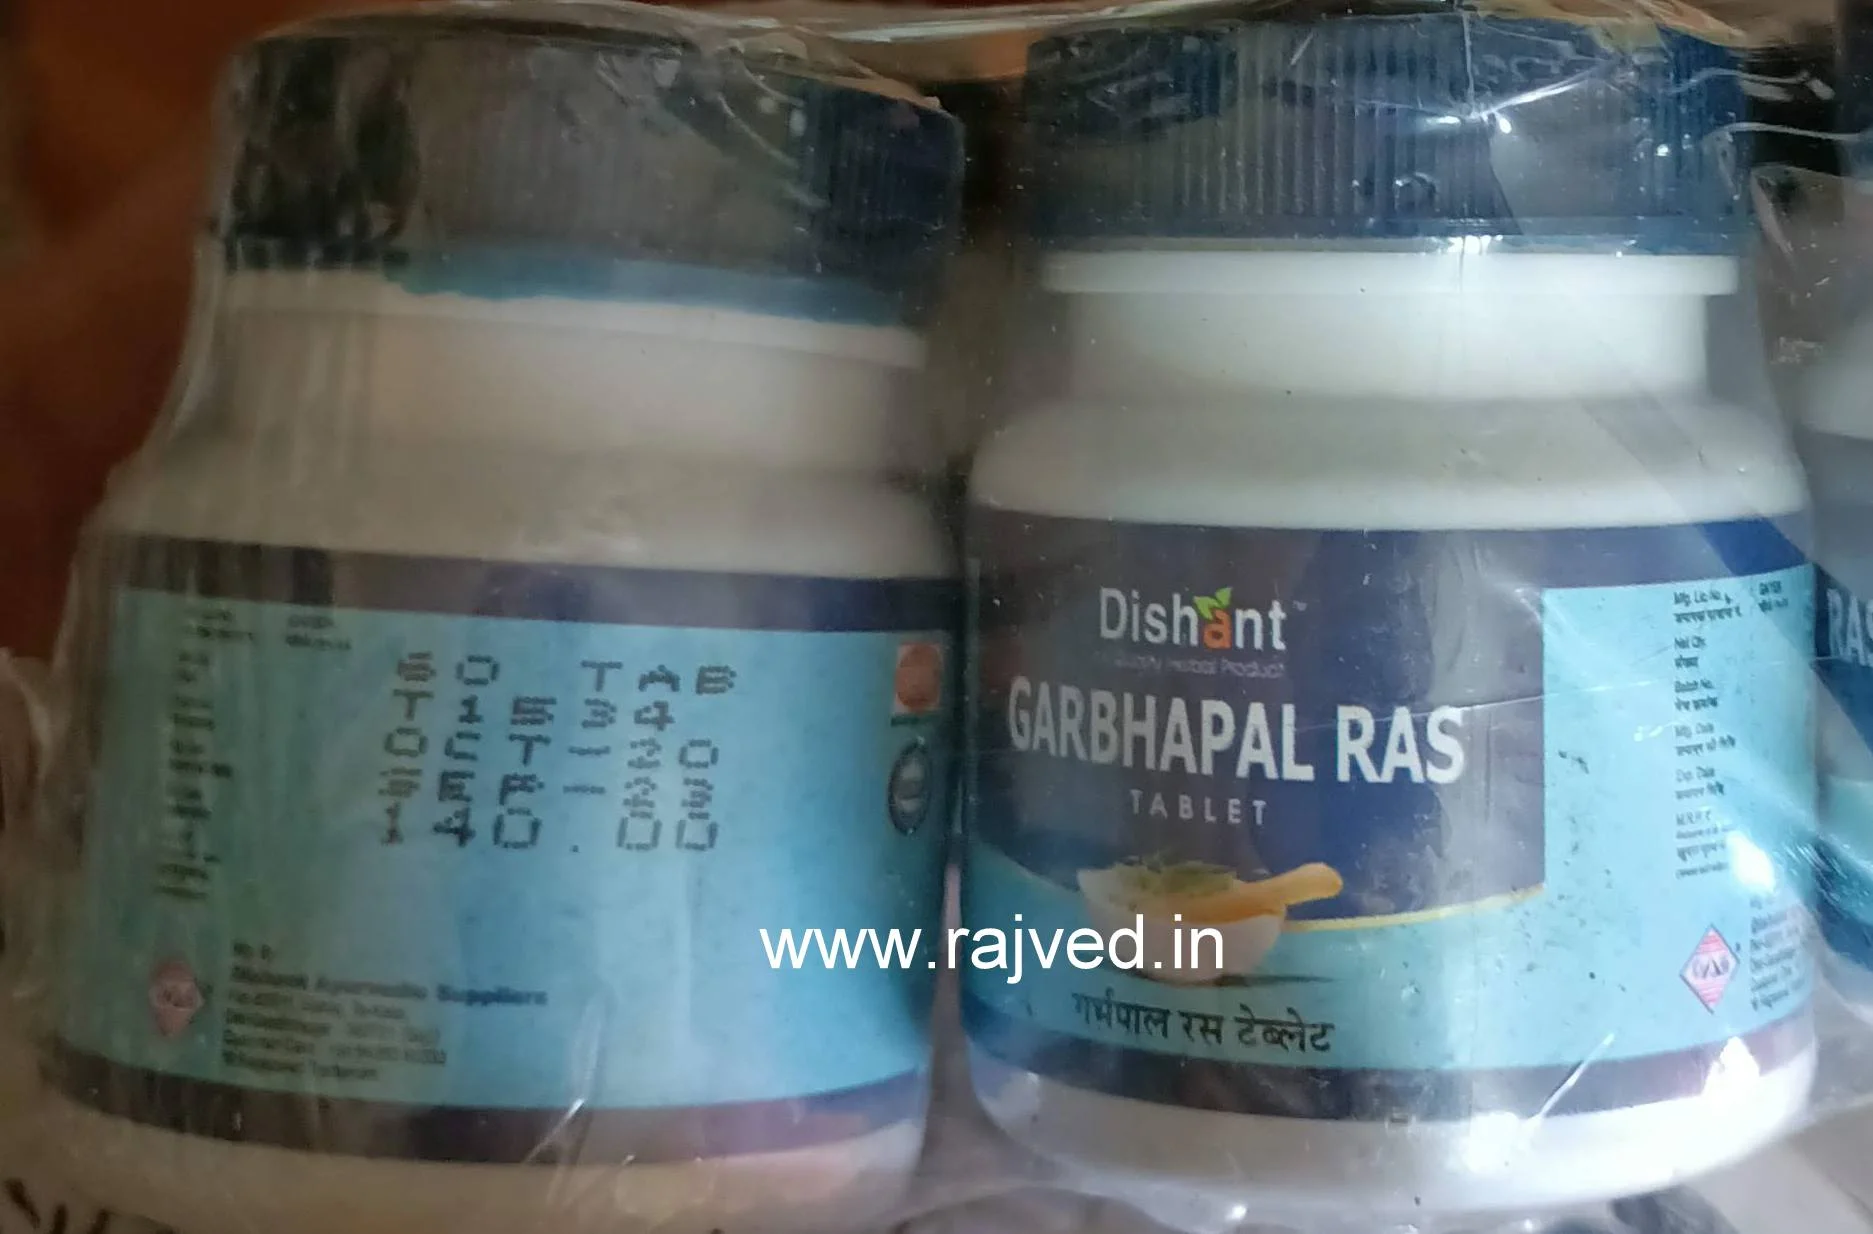 garbhpal ras tablets 250 gm upto 20% off dishant ayurvedic suppliers